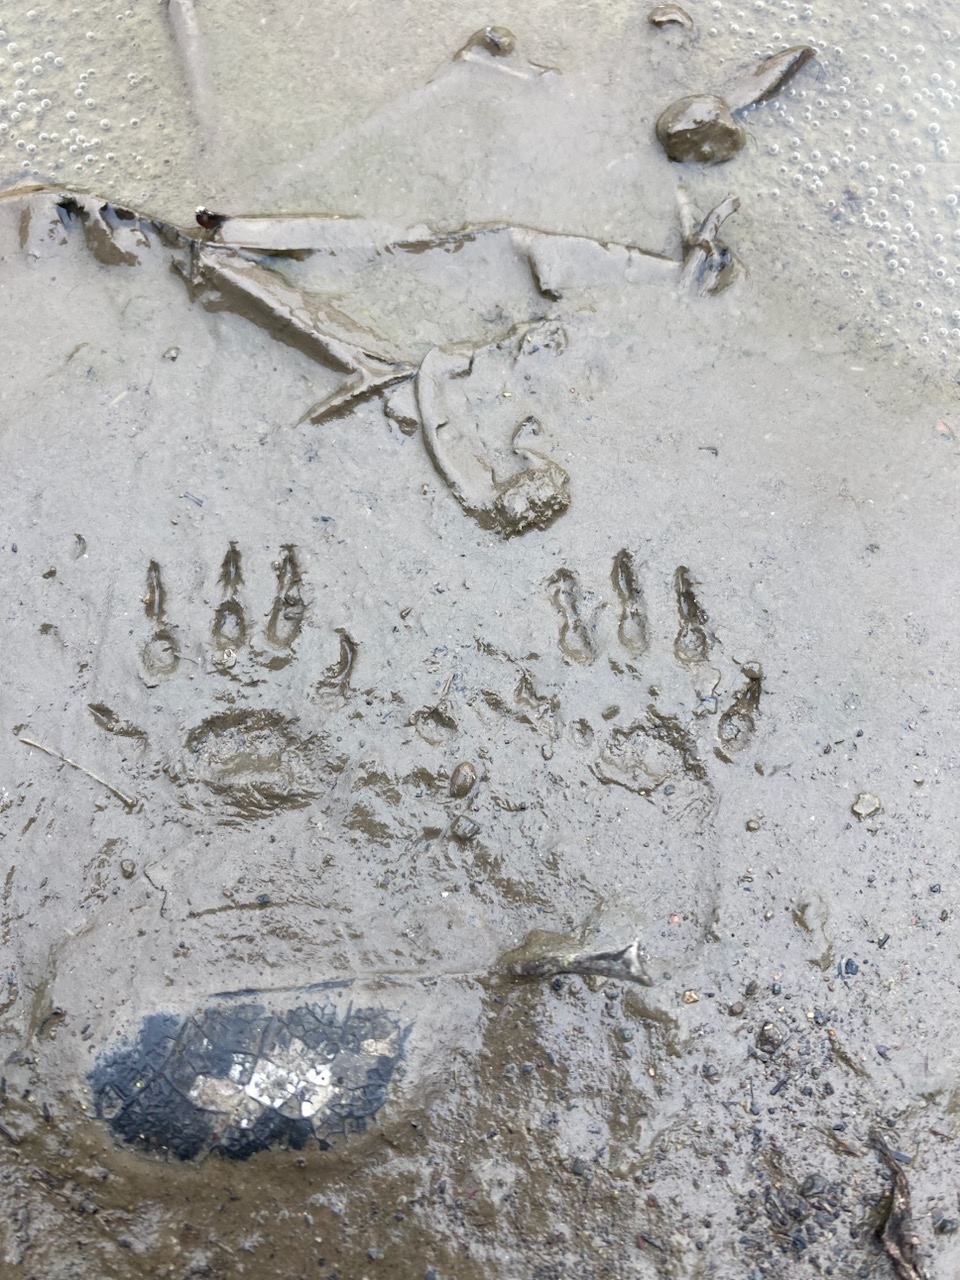 Animal tracks in mud